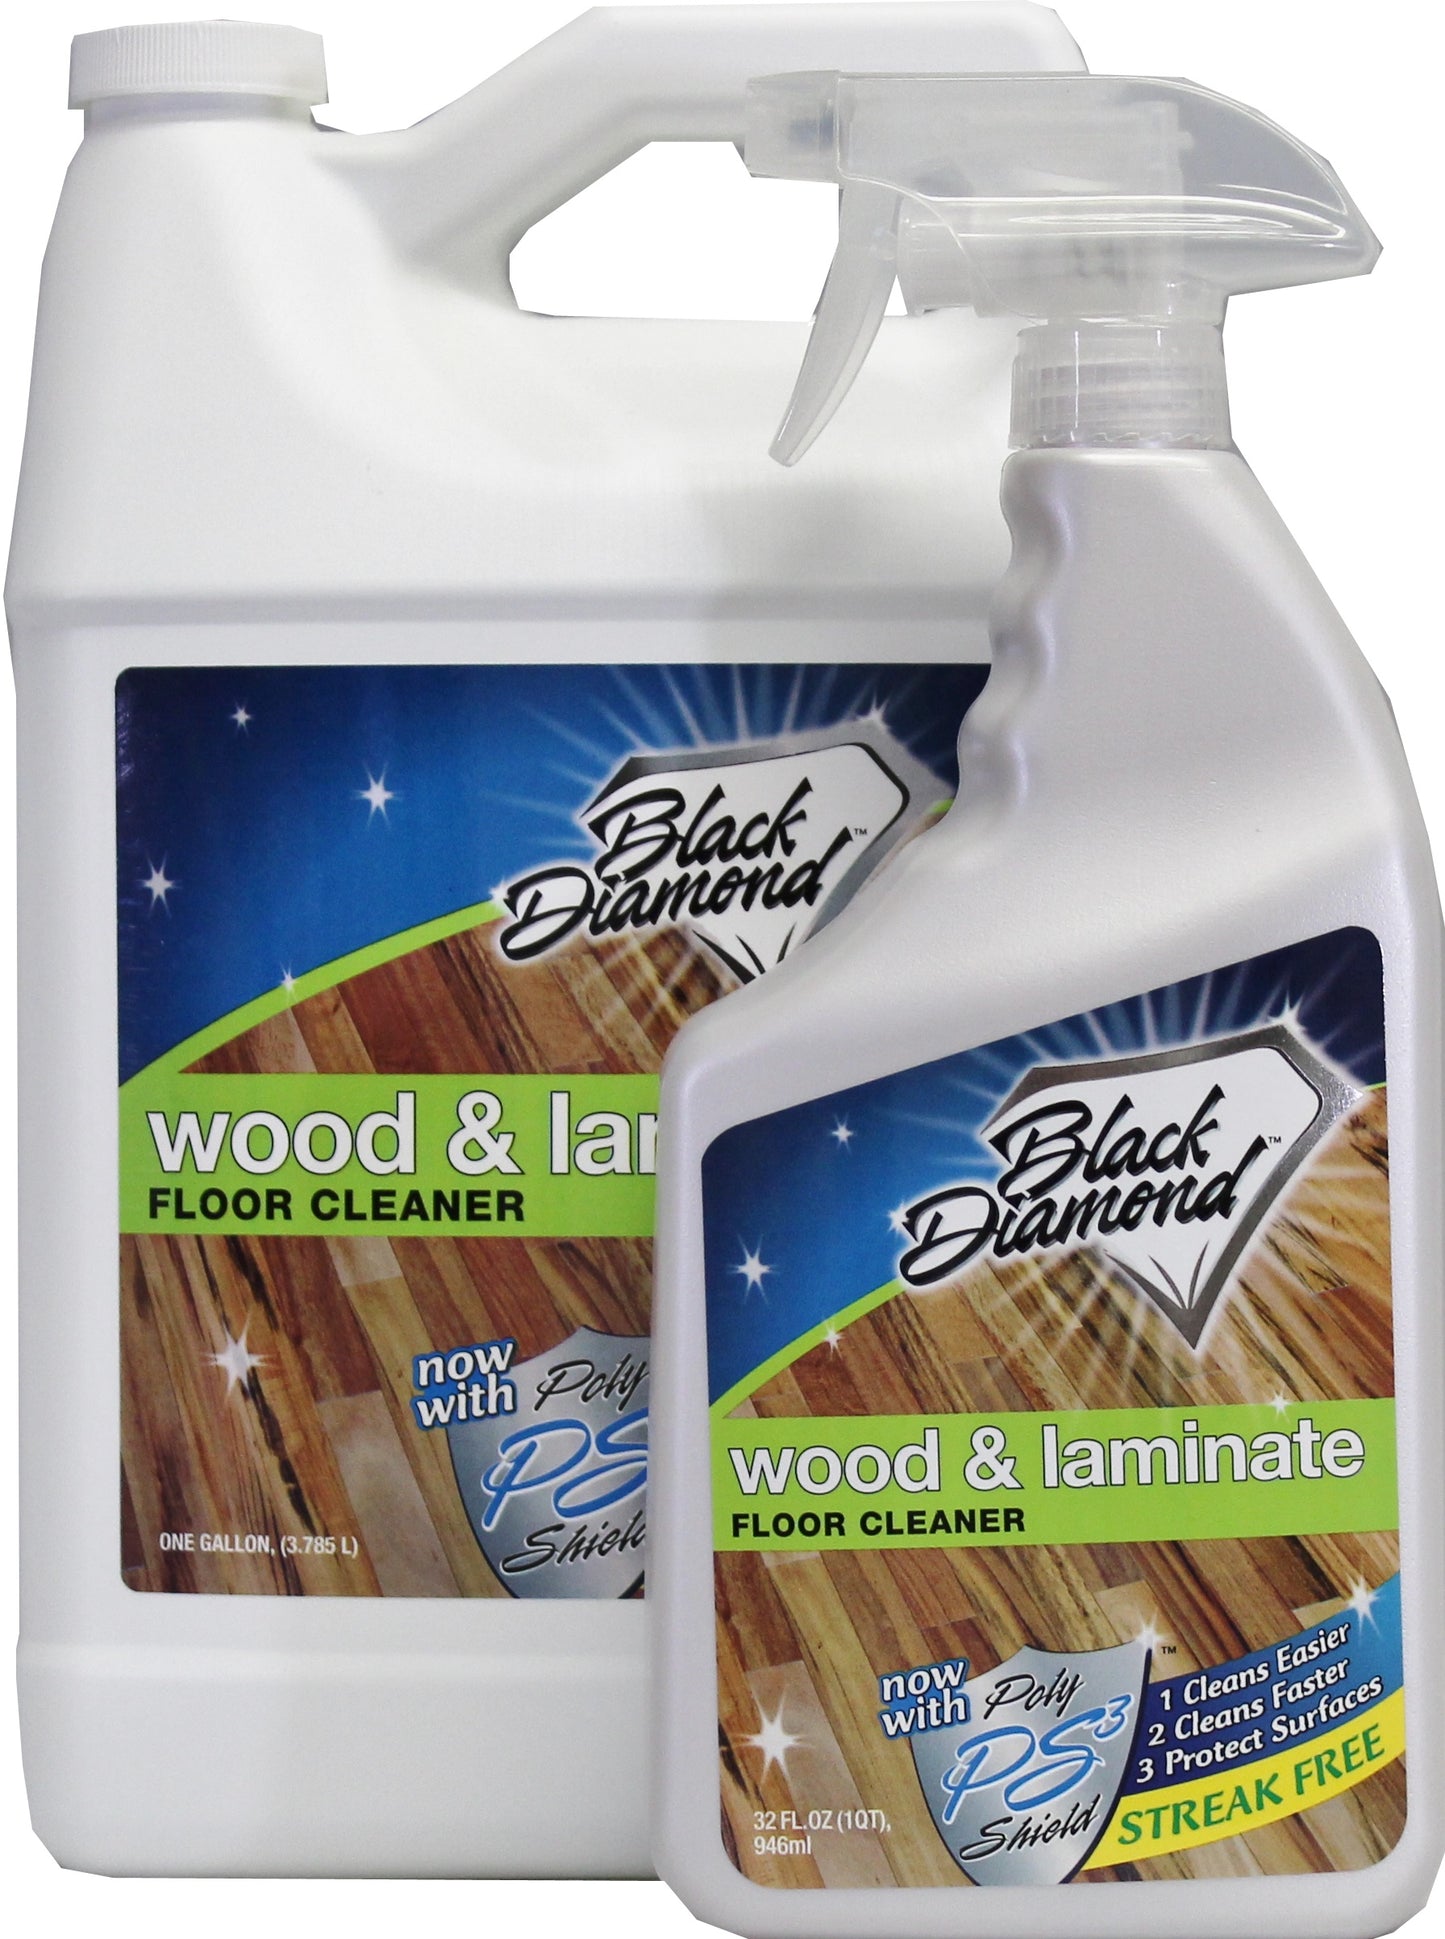 Black Diamond Stoneworks Wood & Laminate Floor Cleaner: For Hardwood, Real, Natural & Engineered Flooring –Biodegradable Safe for Cleaning All Floors